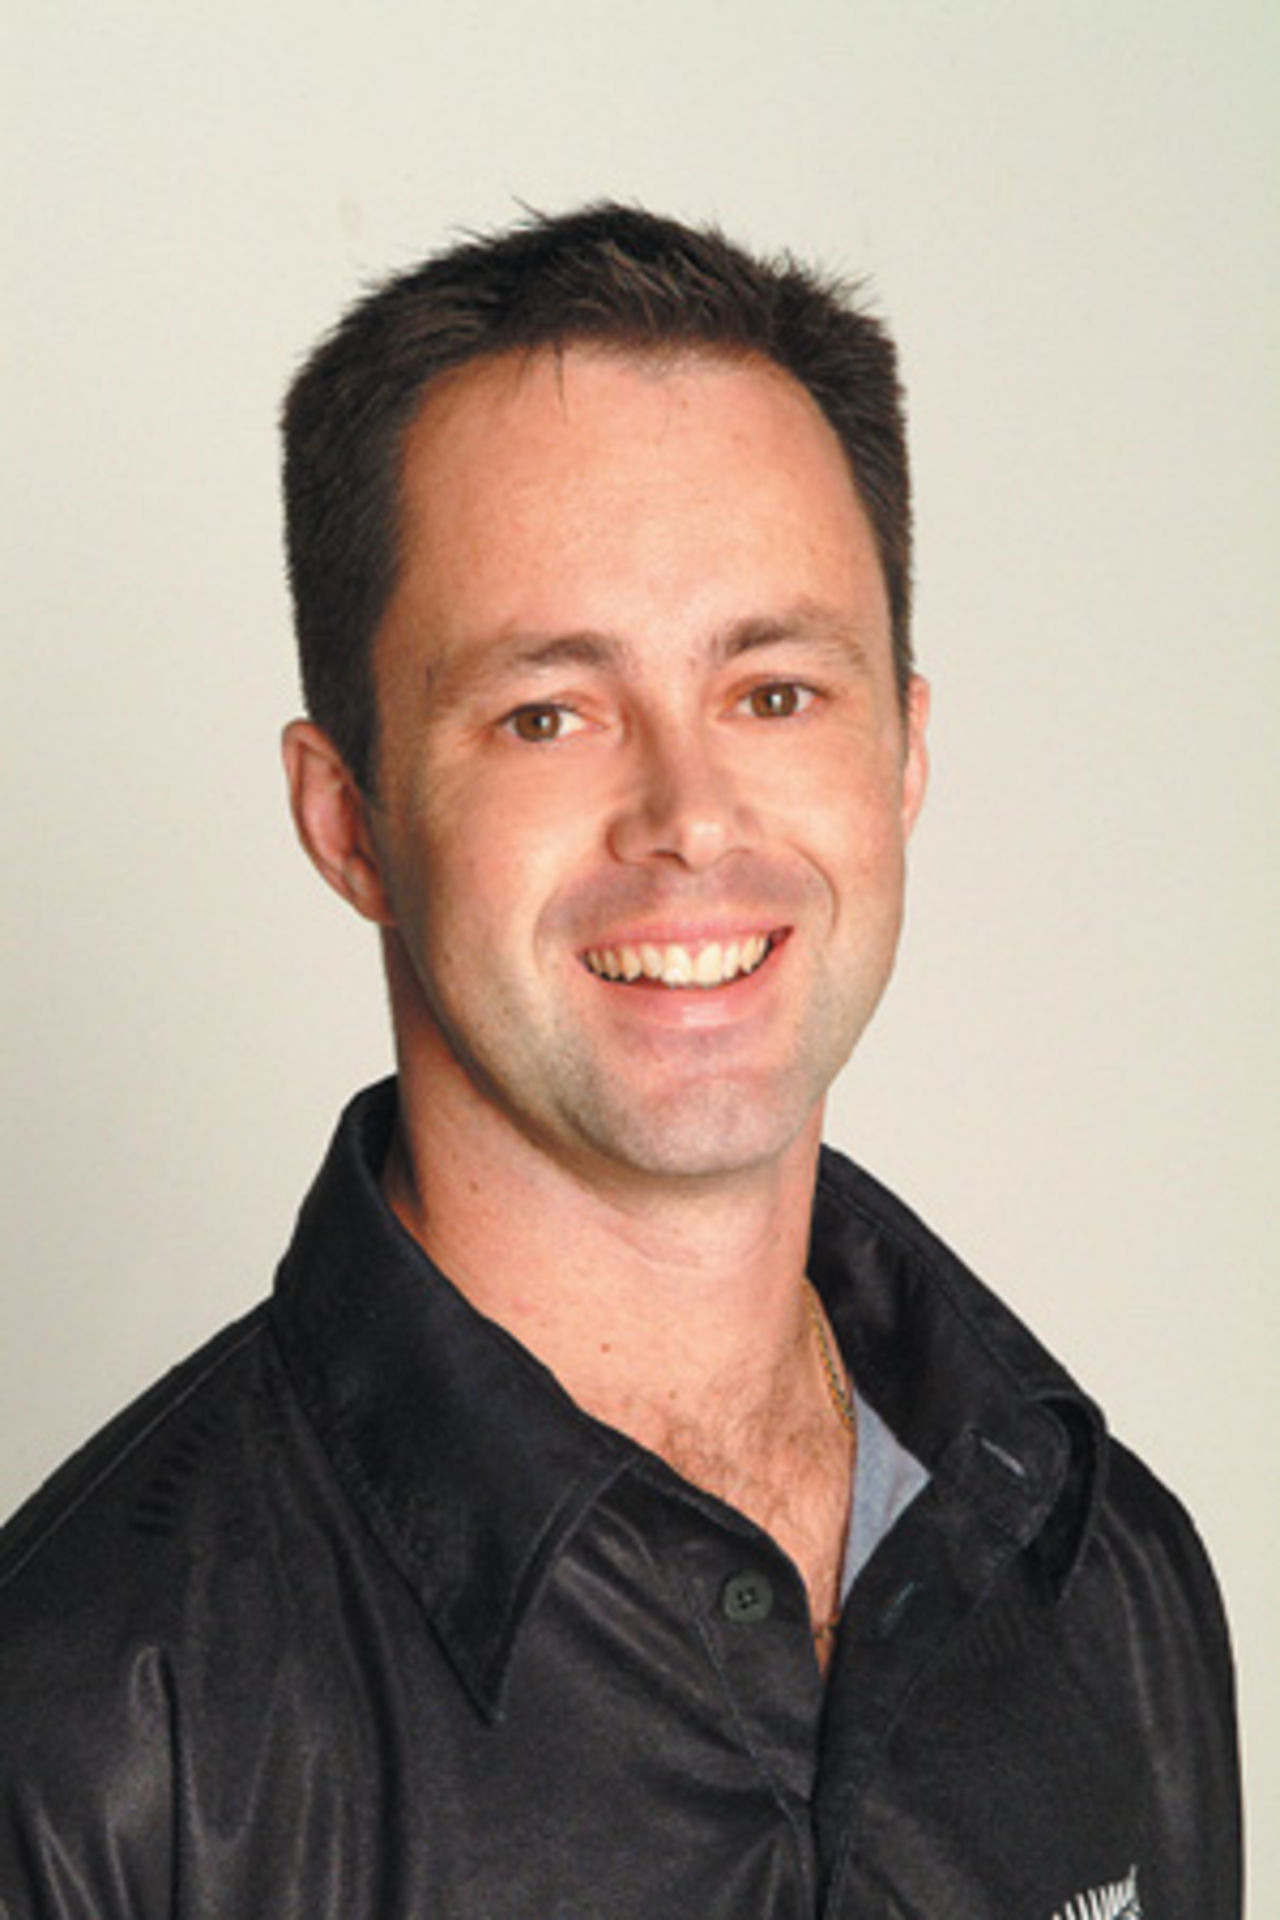 Portrait of Matthew Hart - New Zealand player in the 2002/03 season.